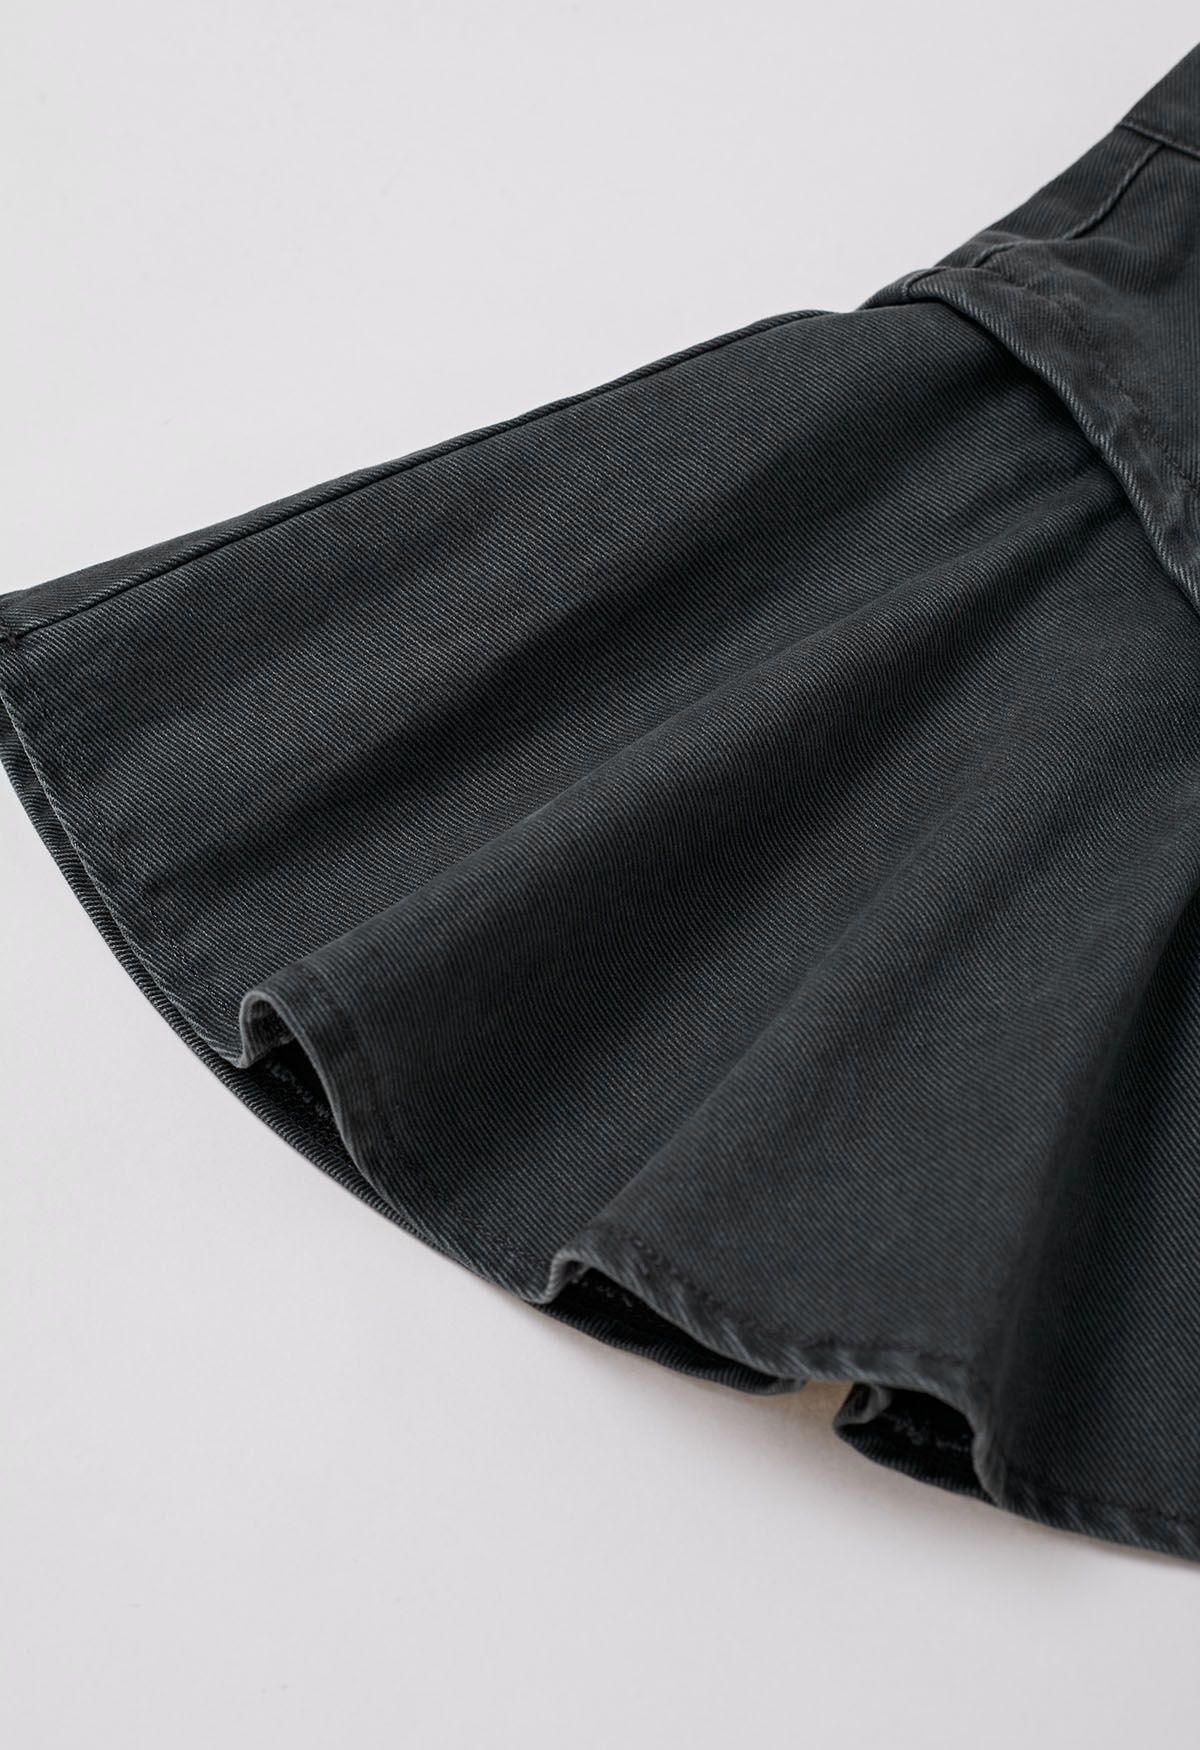 Mini-jupe évasée en jean au design distinctif, fumée